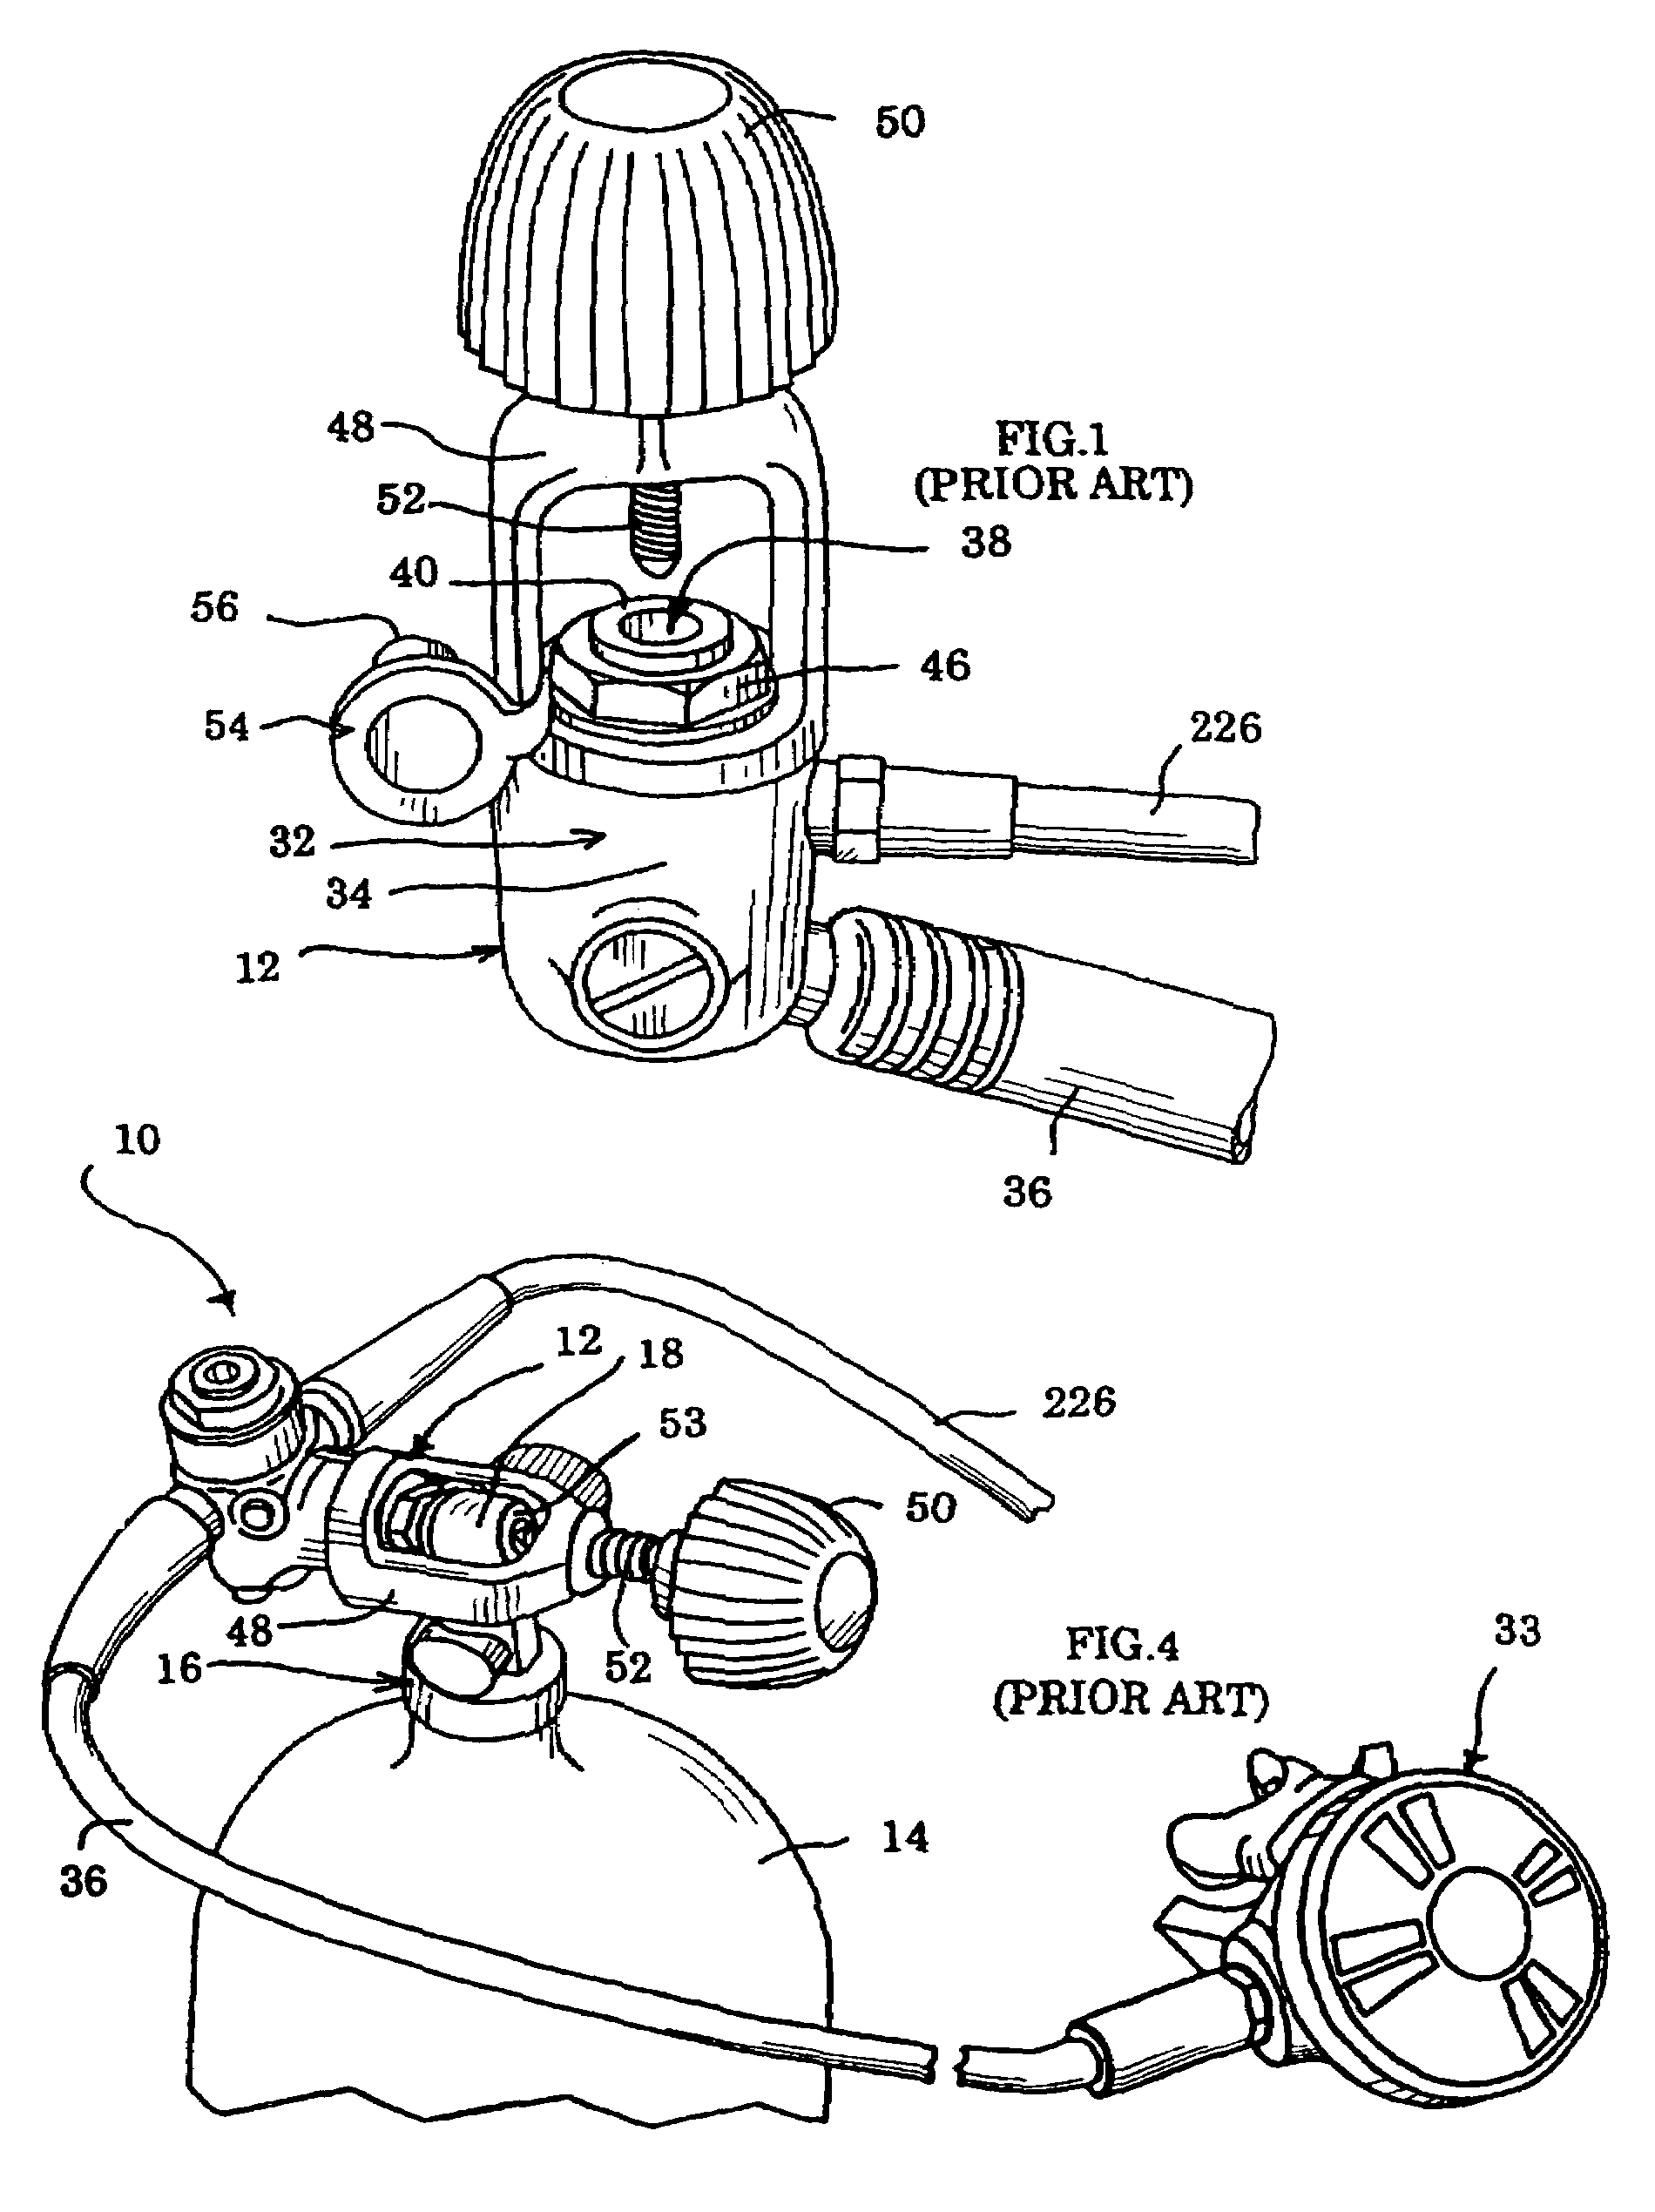 Fluid flow control valve